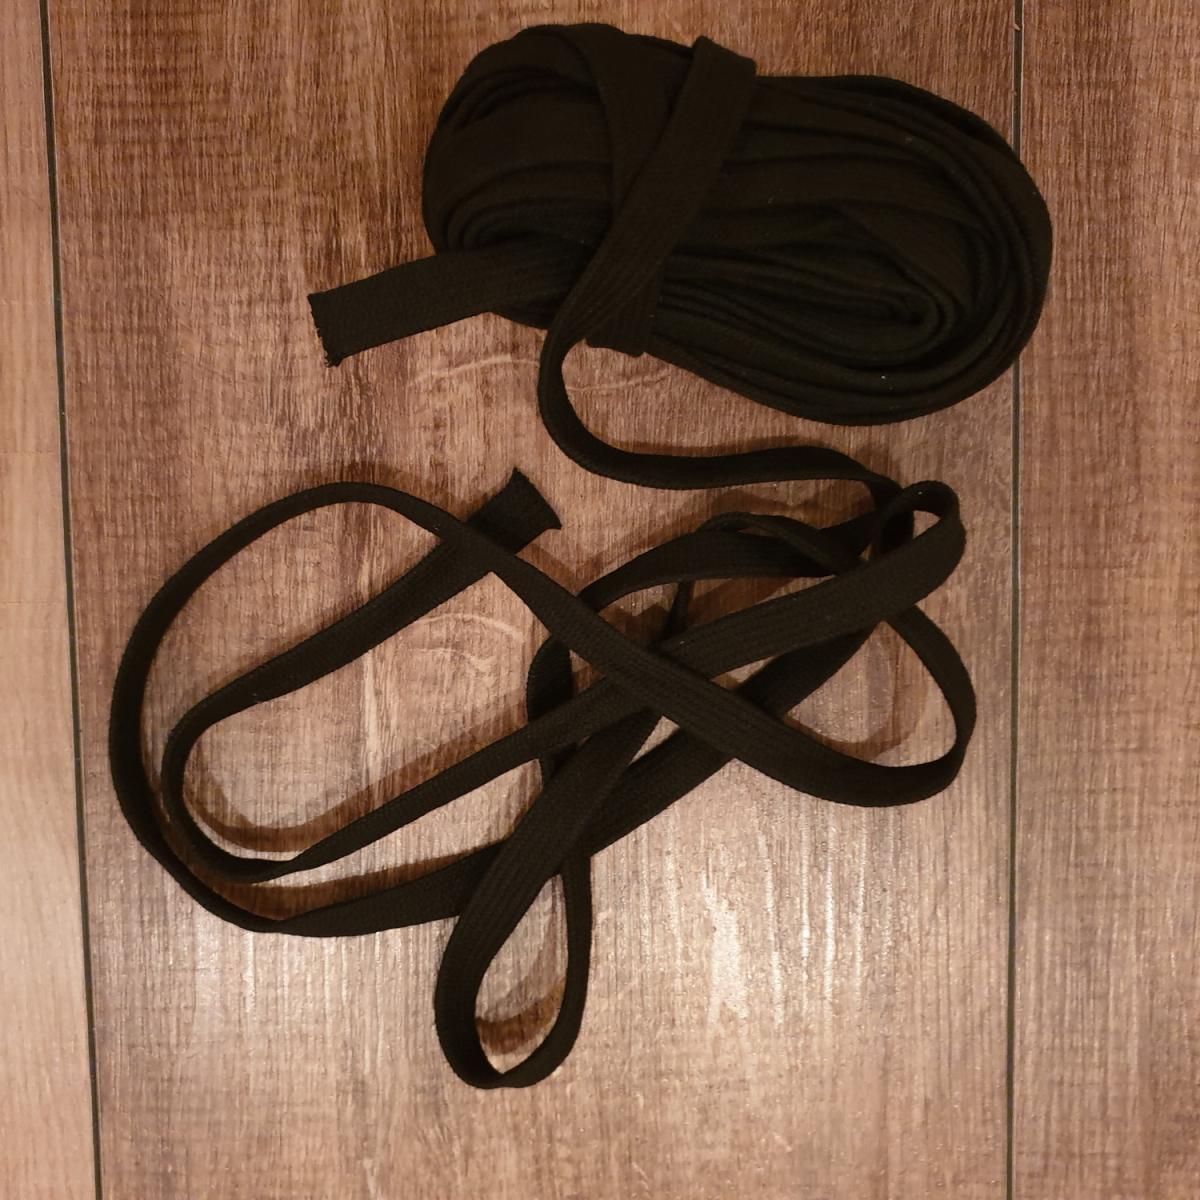 Sageo made of cotton in the color black ♥ Sageo 180 cm, Sageo 200 cm✅ for your martial arts ✓ Aikido, Iaido, Kendo, Koryu, Jodo✅ Top price & high quality✓ 100% cheap✔Order online now➤ www.bokken-shop. de